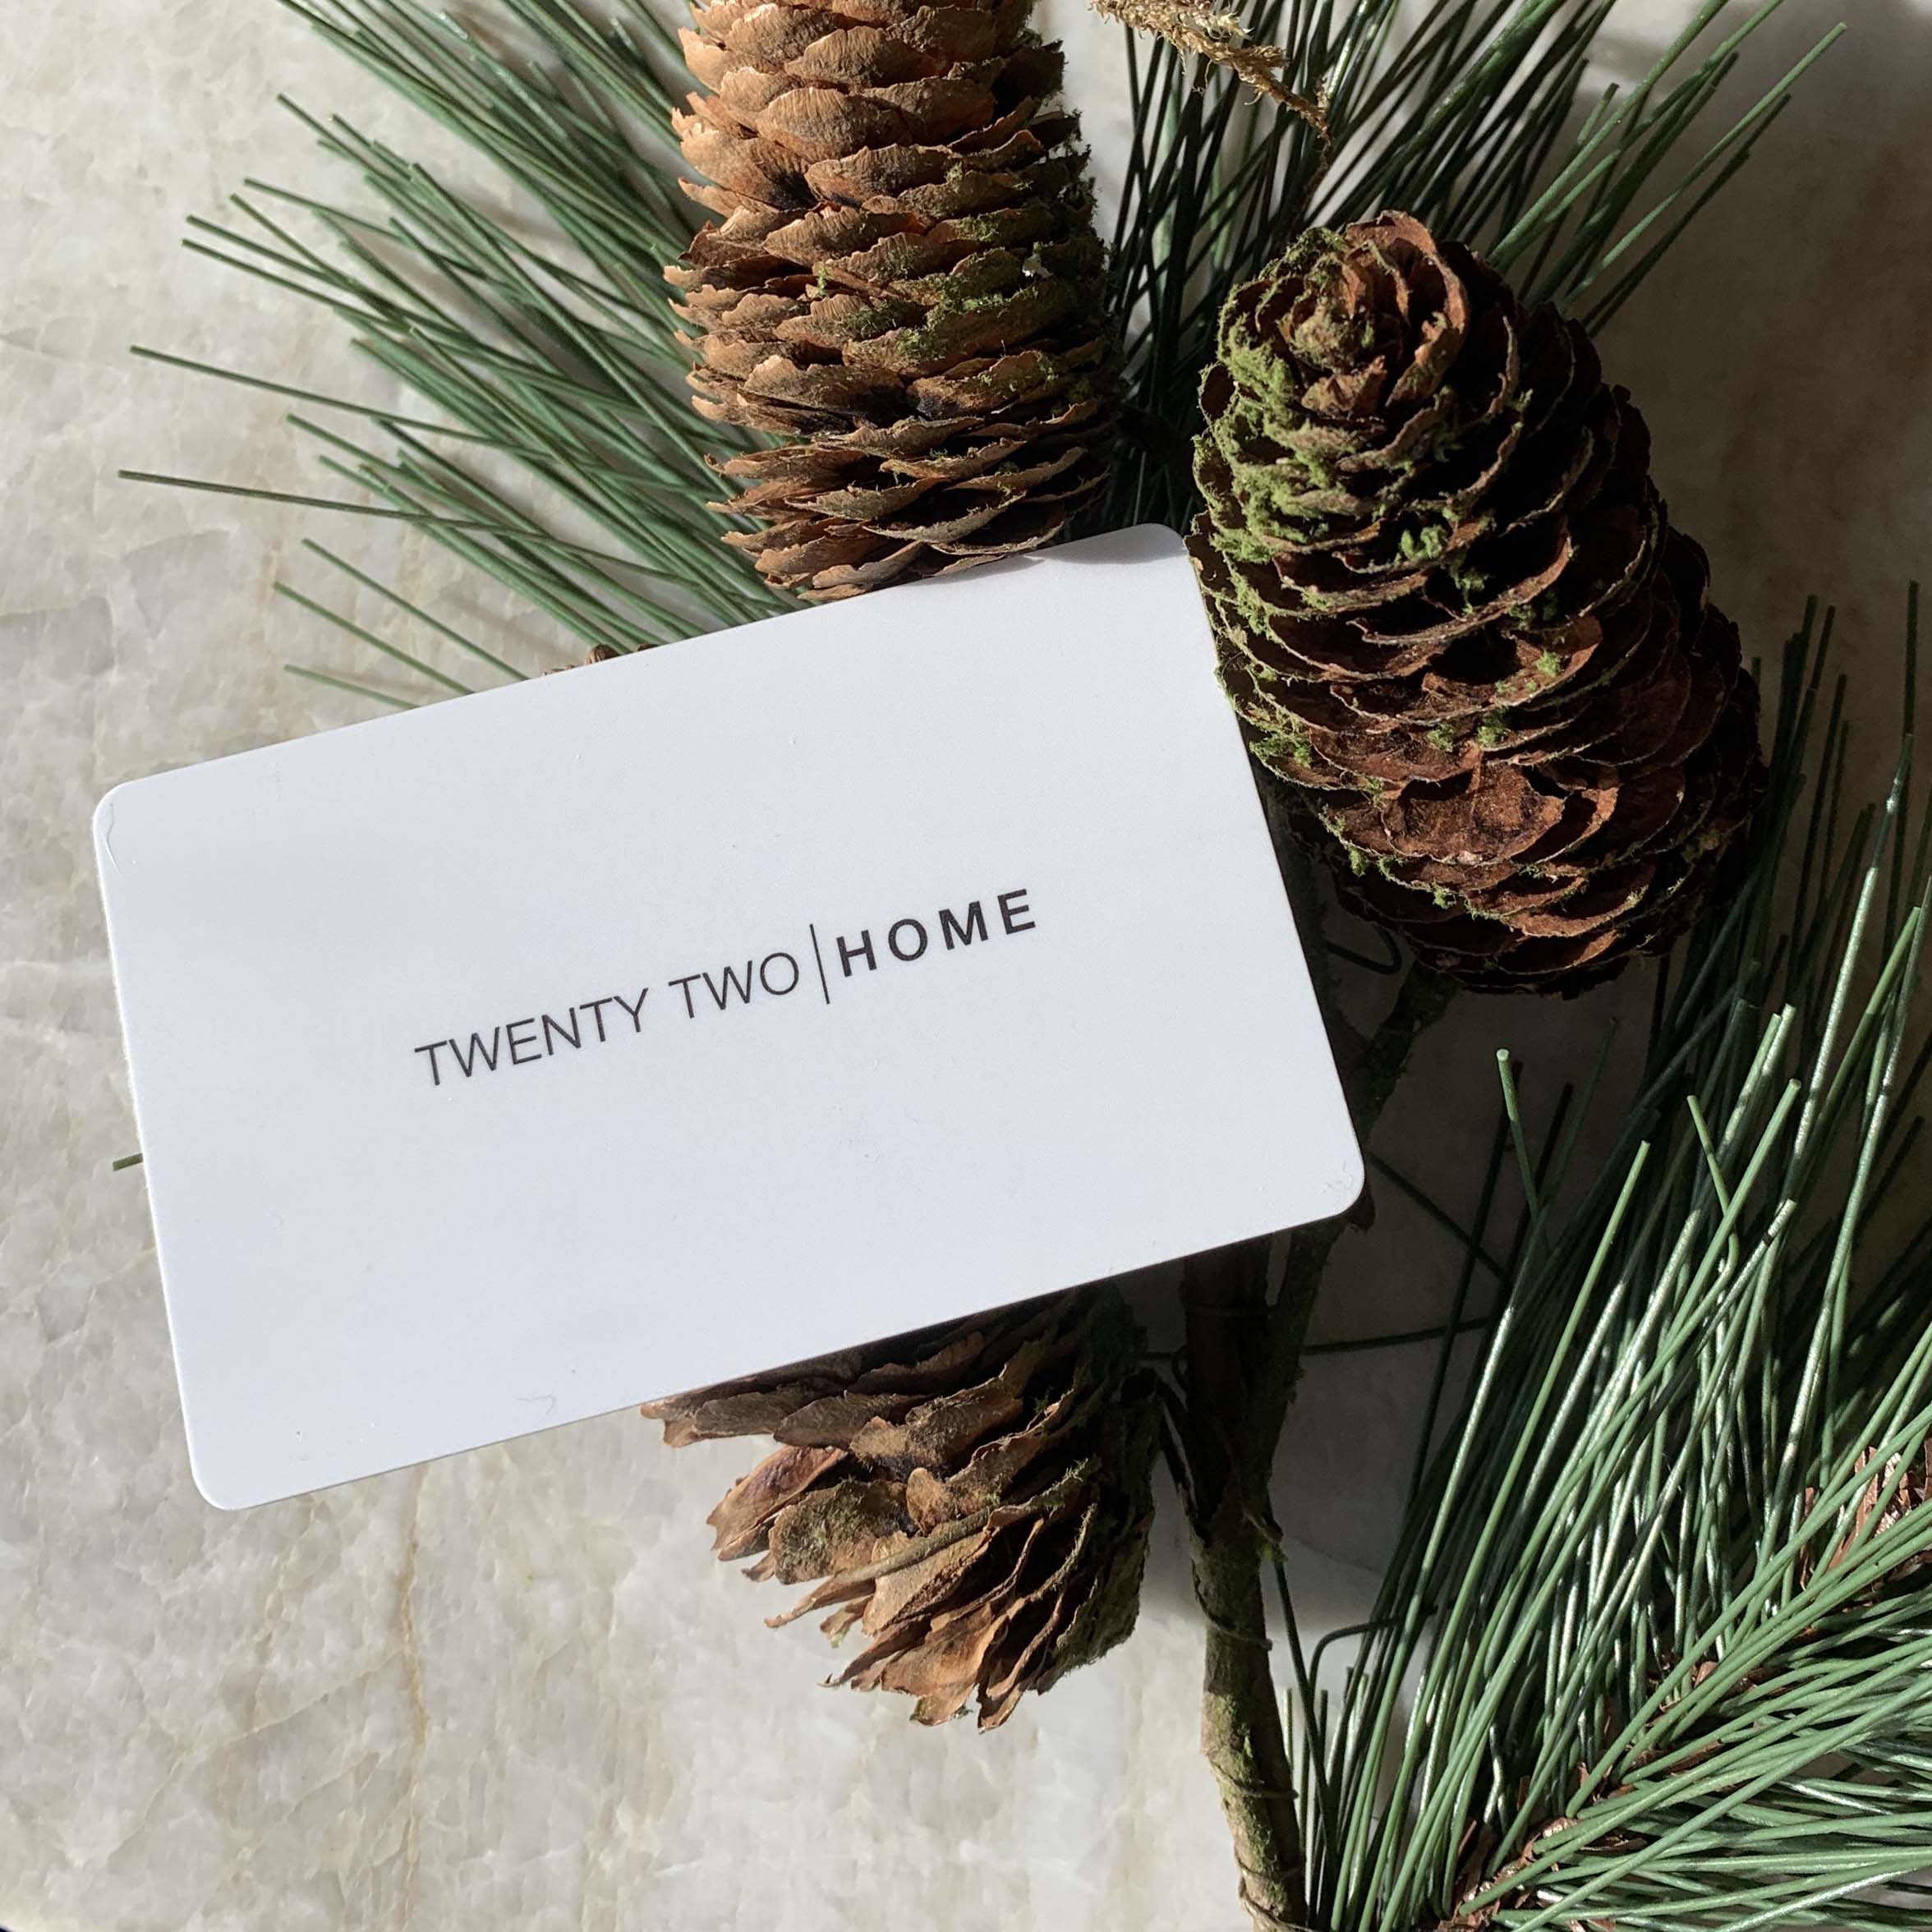 Twenty Two Home Gift Card